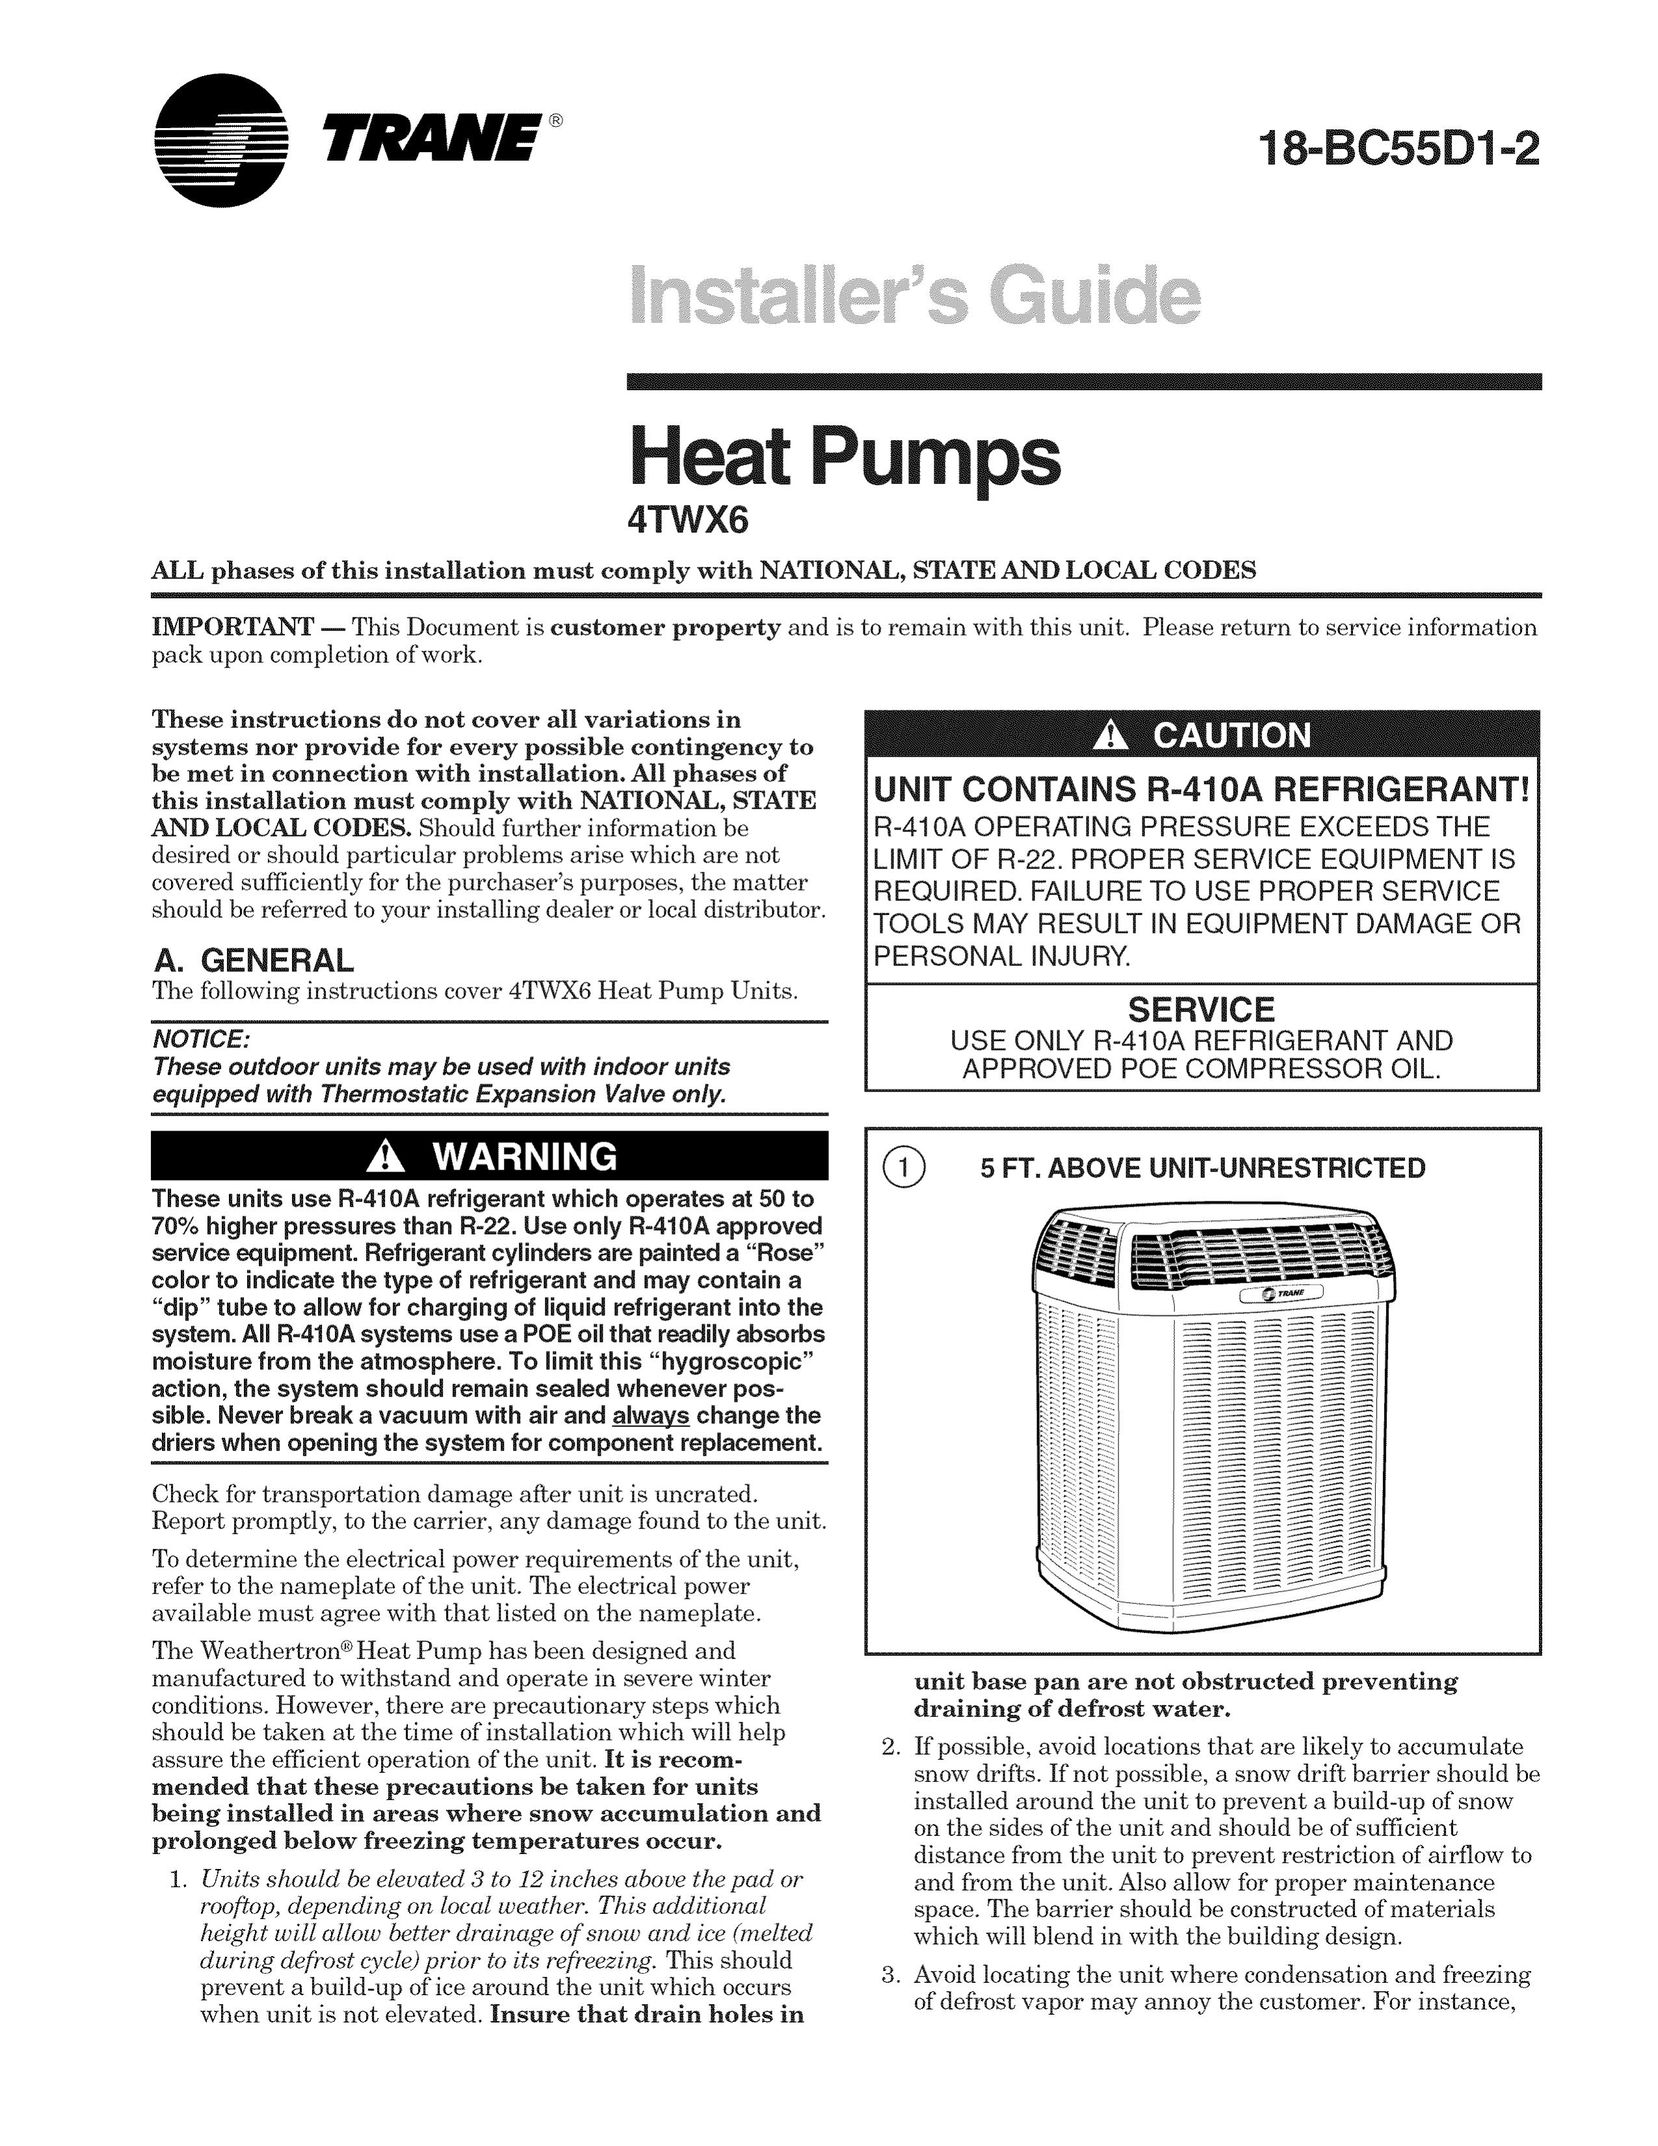 Trane 4TWX6 Heat Pump User Manual